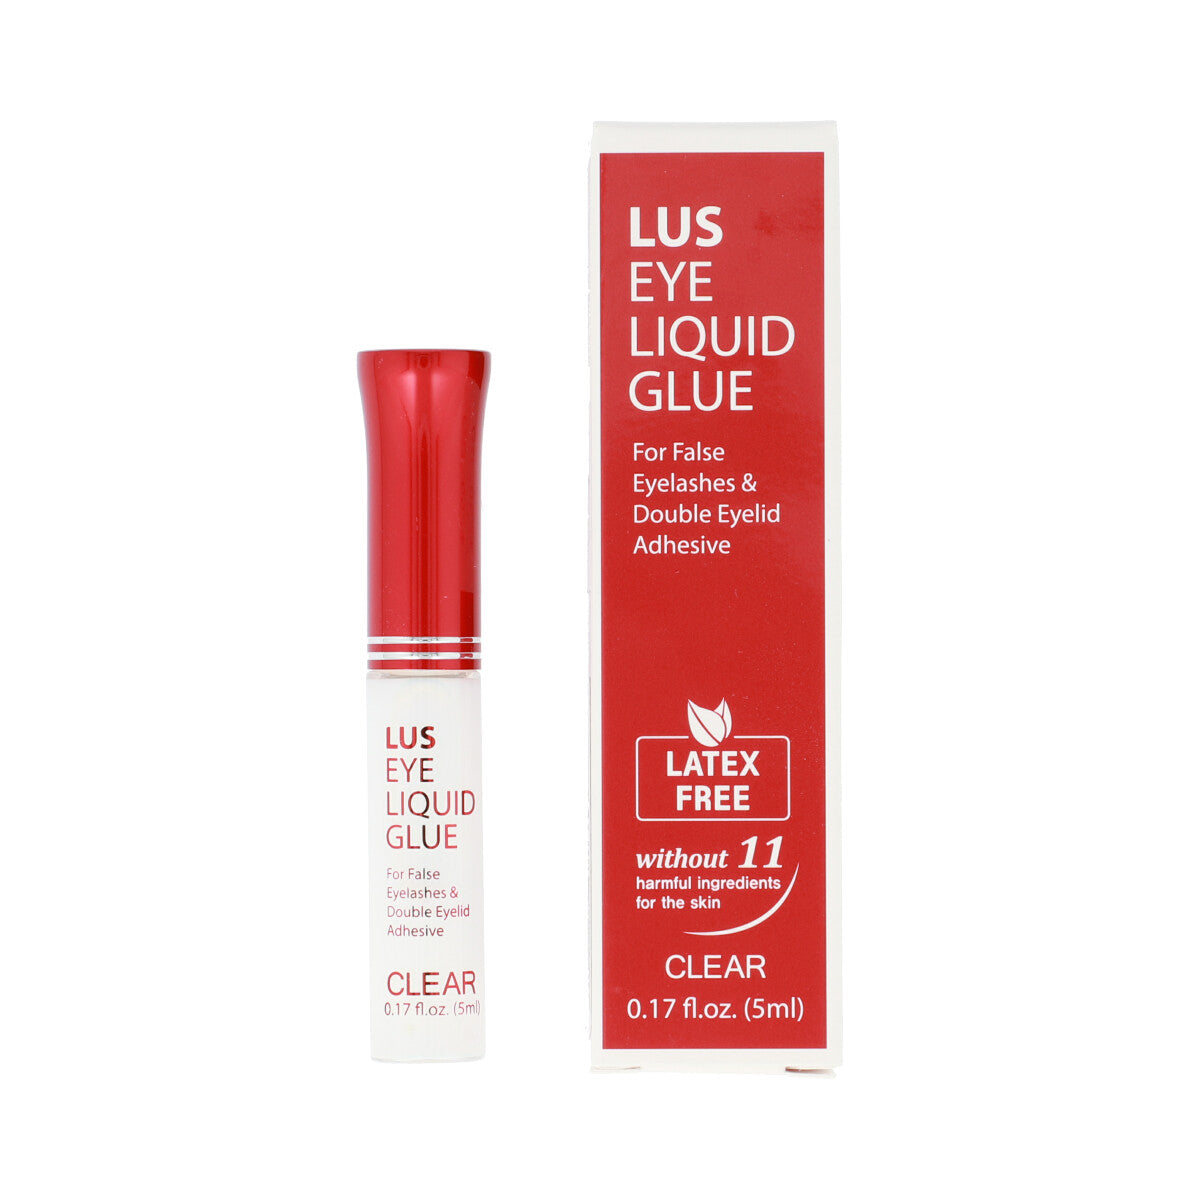 LUS Eye Liquid Glue - Clear